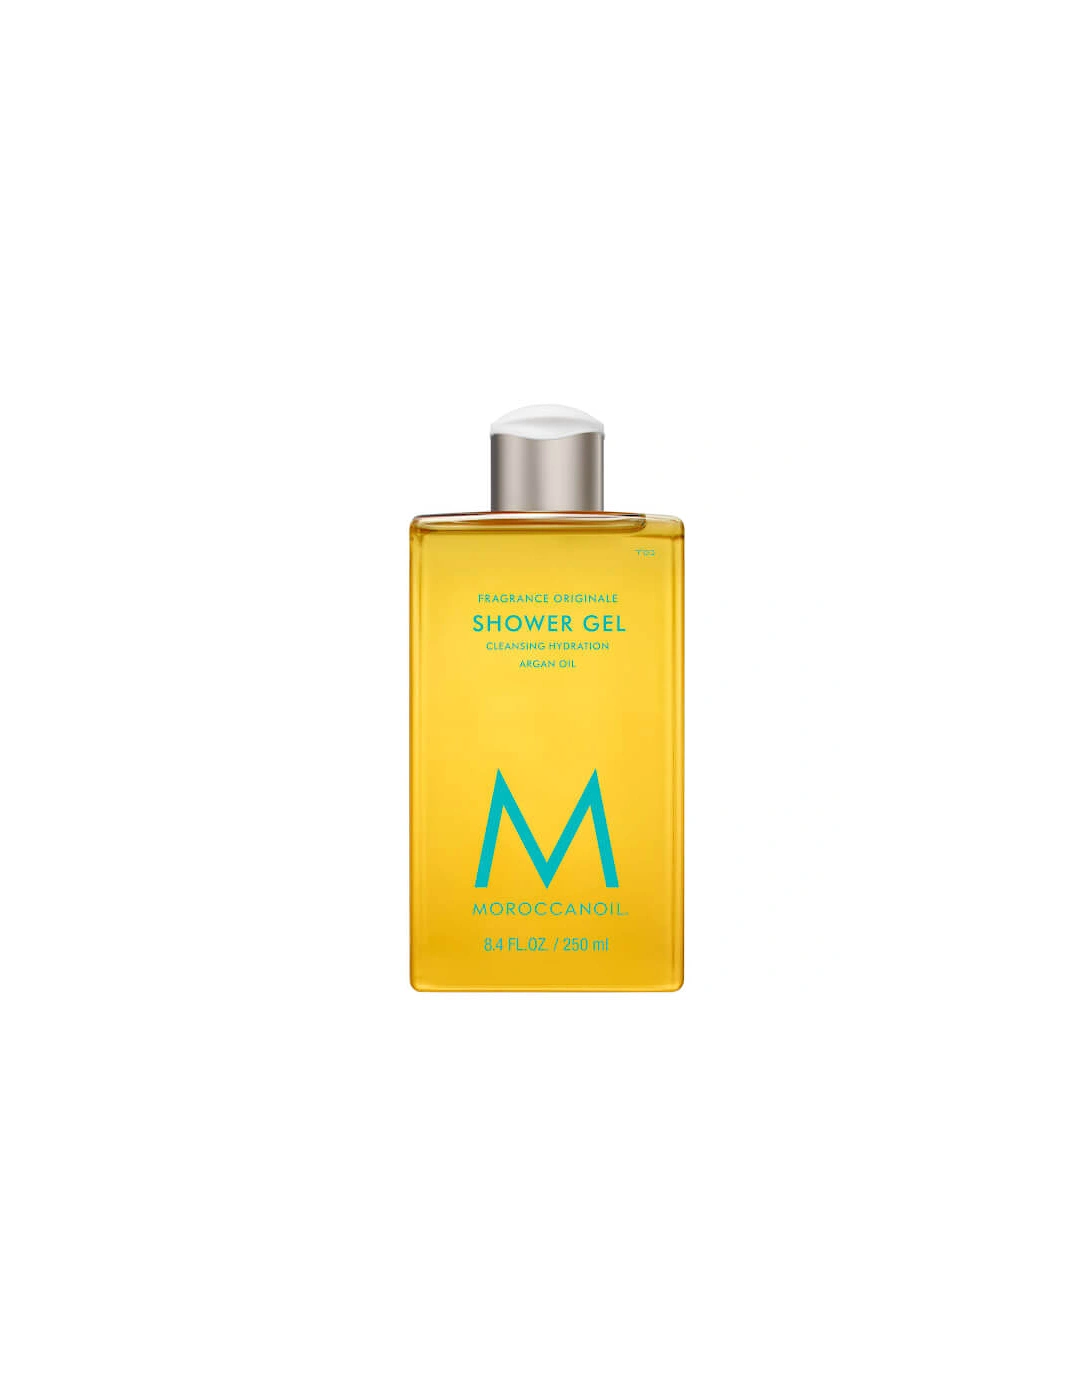 Moroccanoil Fragrance Originale Shower Gel 250ml - Moroccanoil, 2 of 1